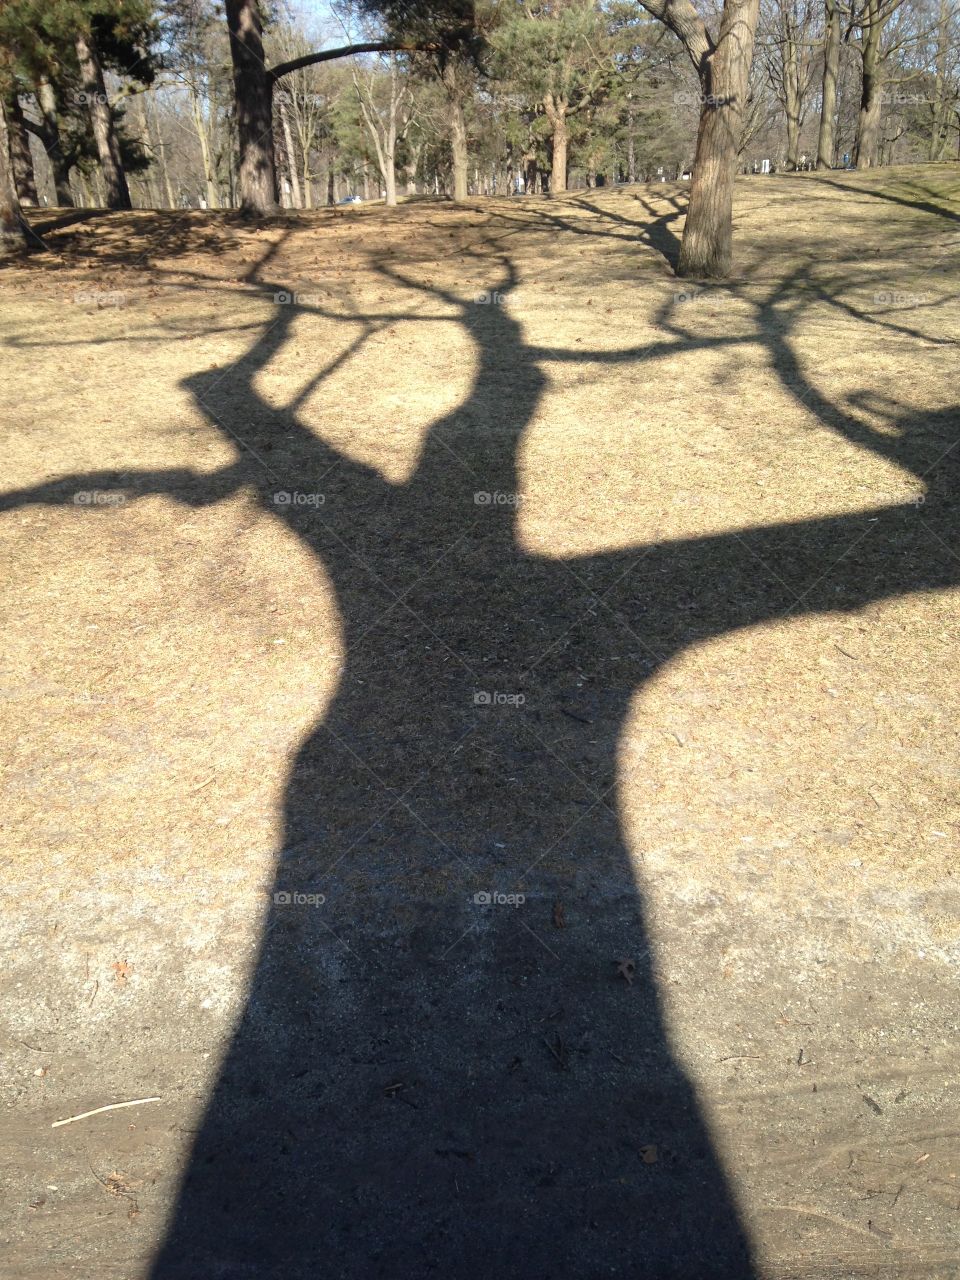 Tree shadow

By Kapturer 